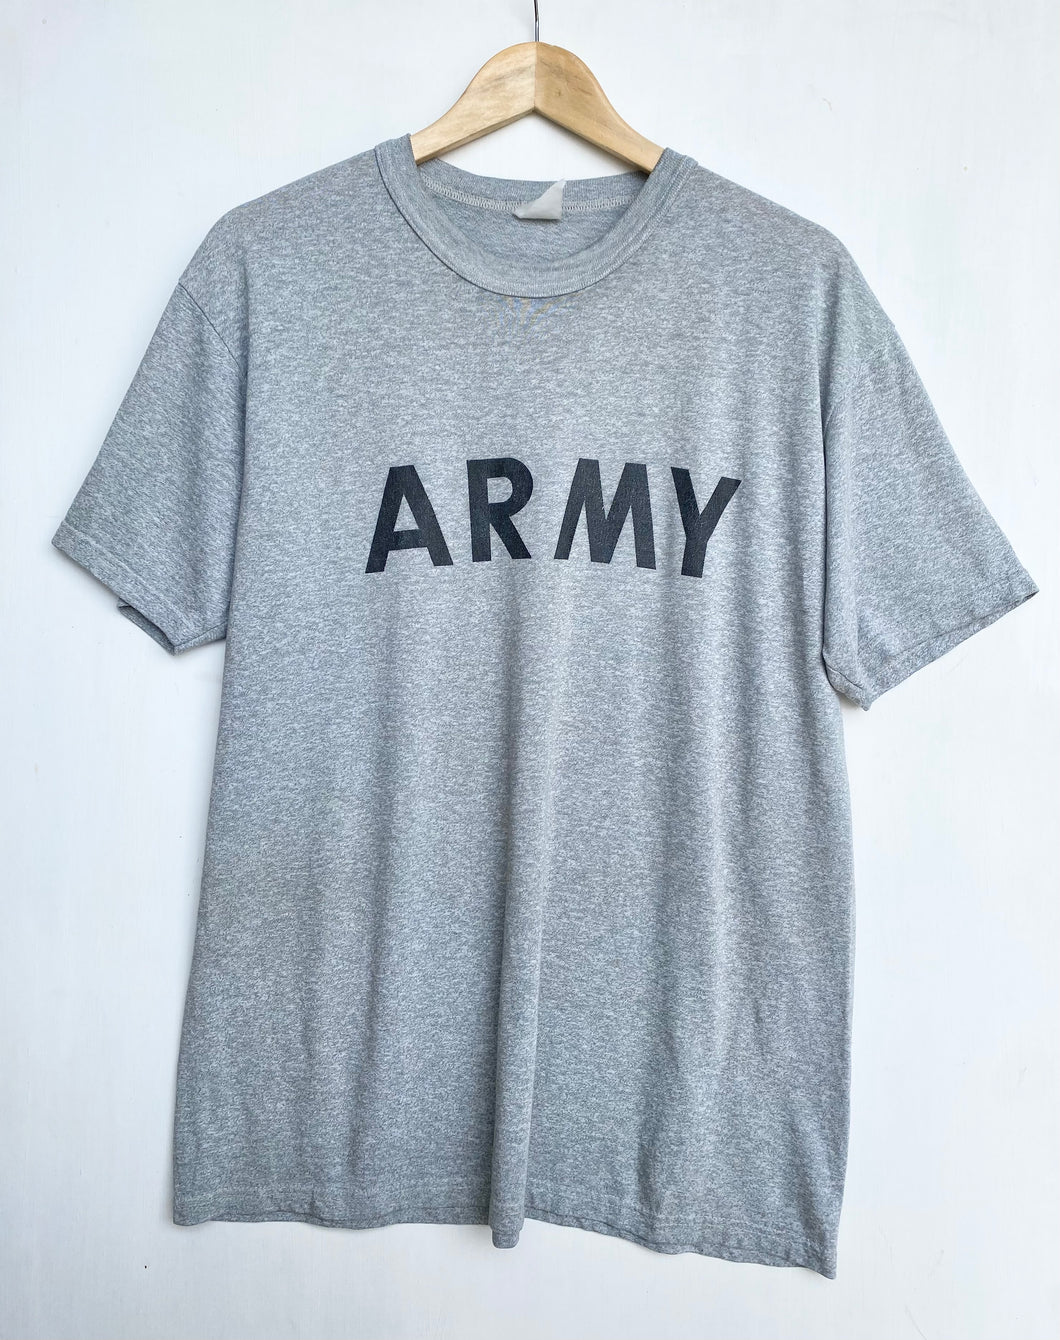 Printed ‘Army’ t-shirt (XL)